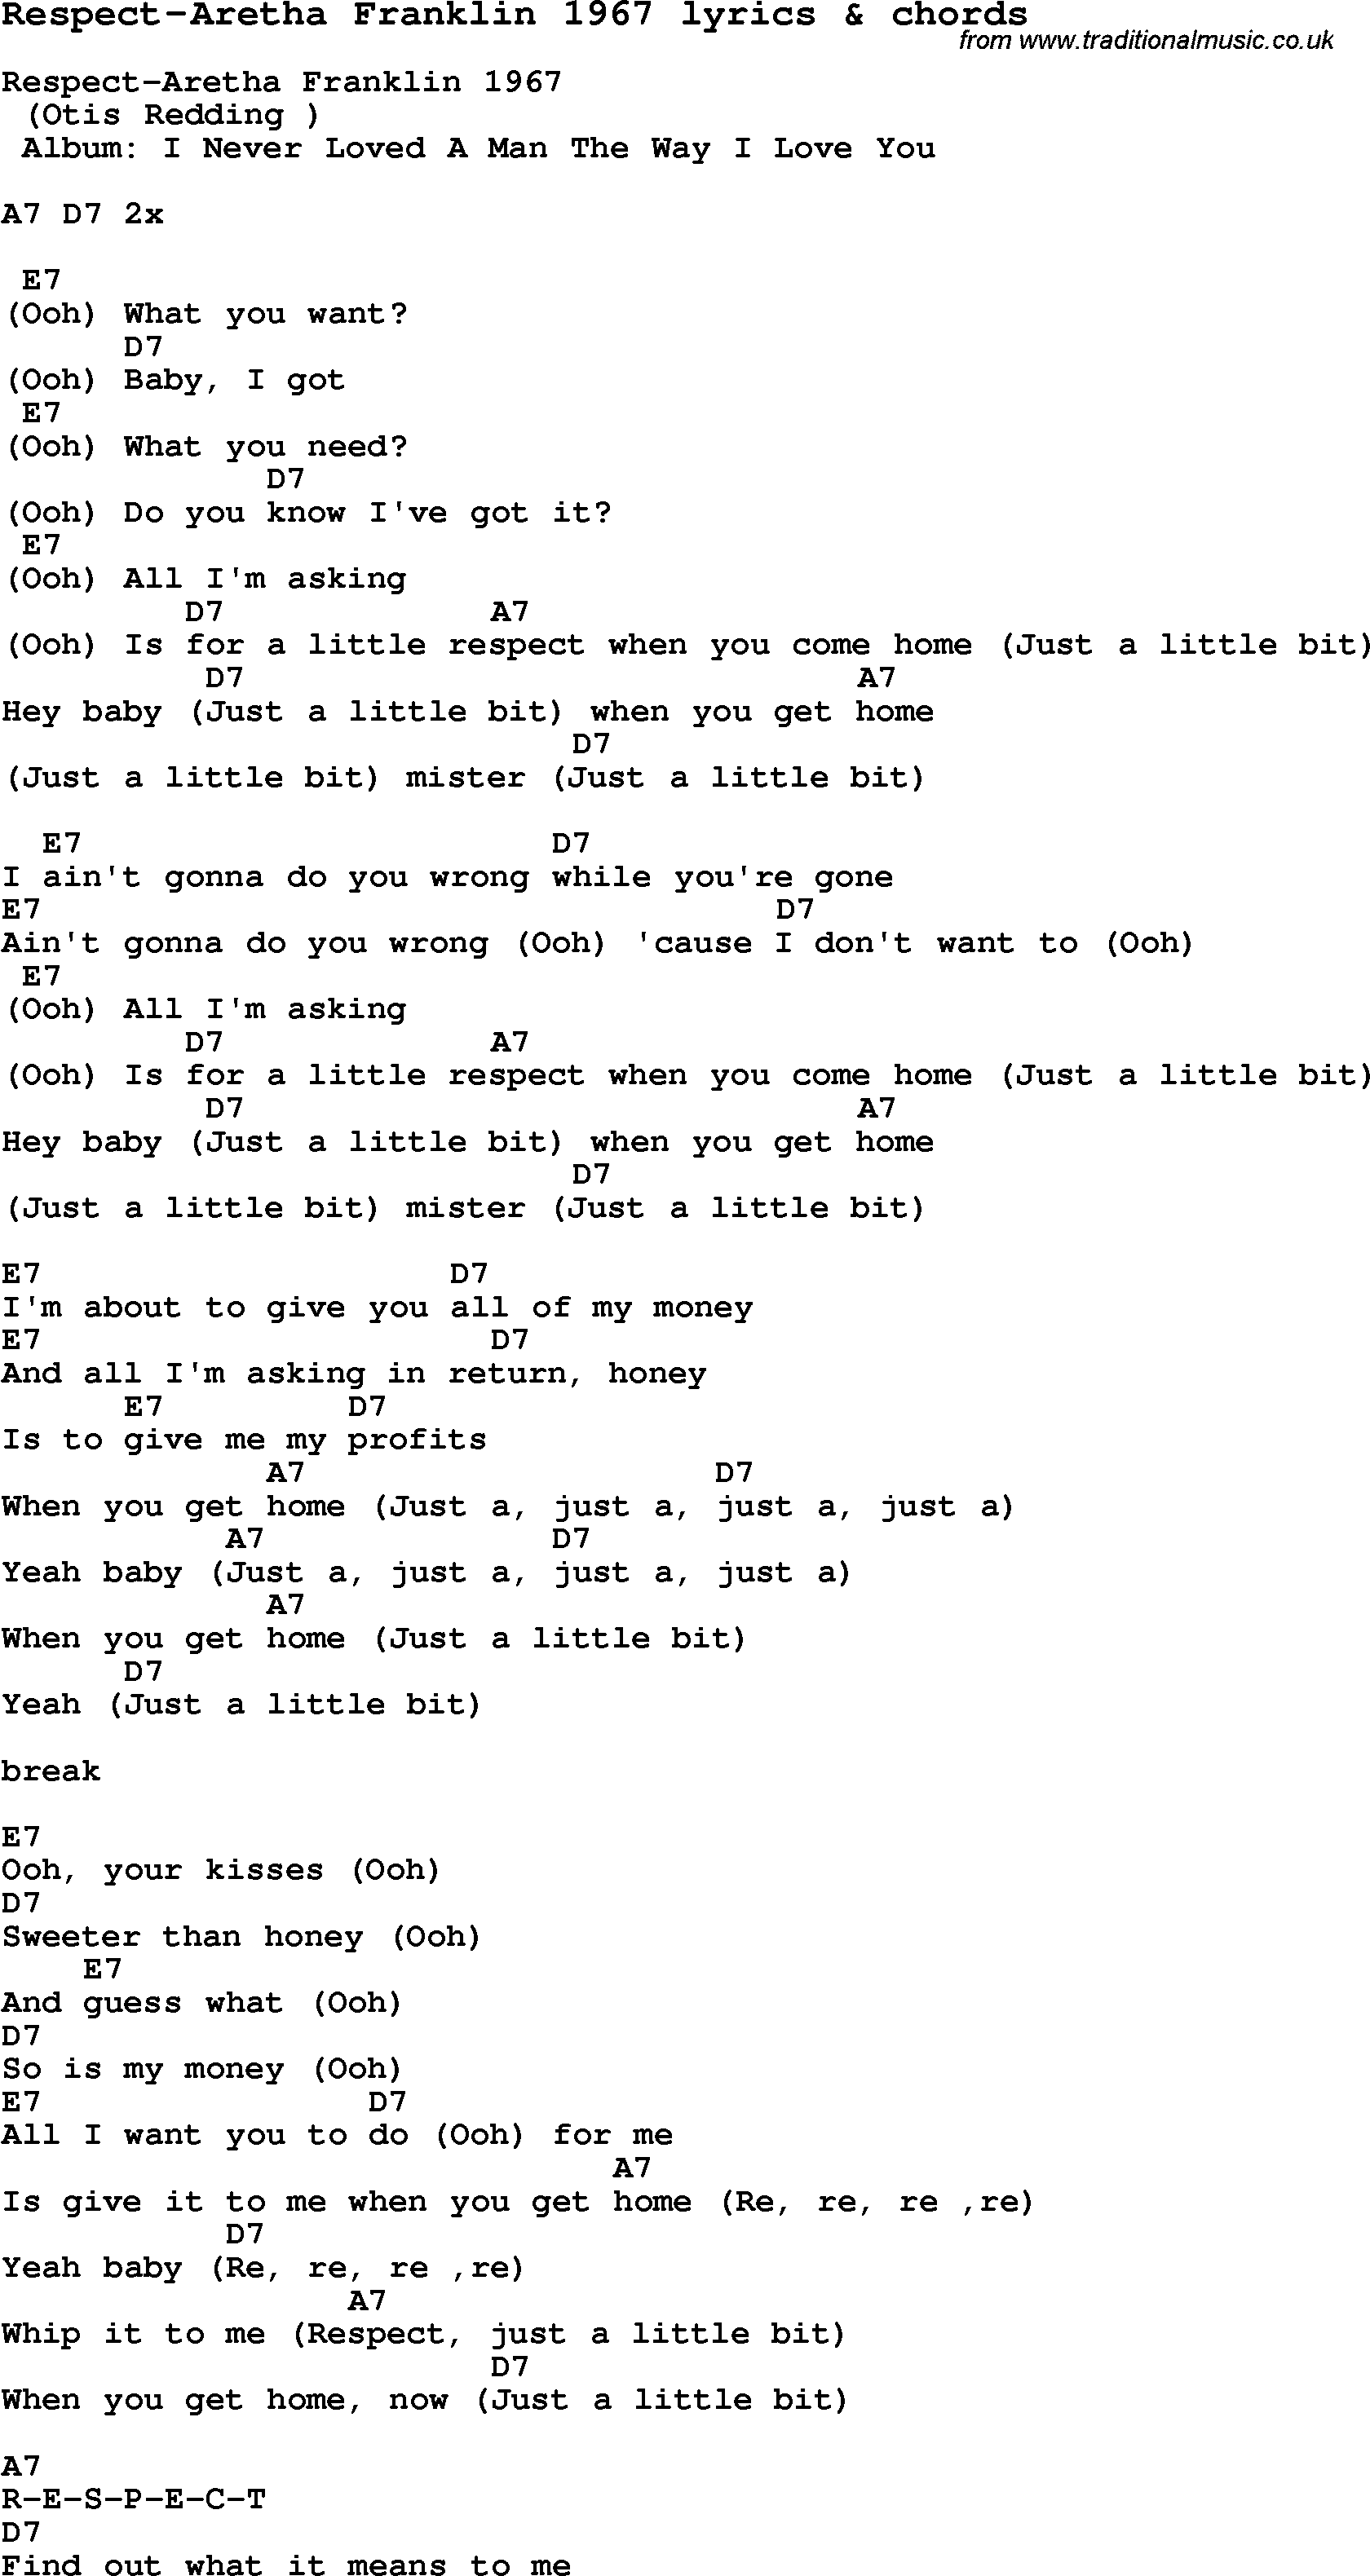 Love Song Lyrics for: Respect-Aretha Franklin 1967 with chords for Ukulele, Guitar Banjo etc.